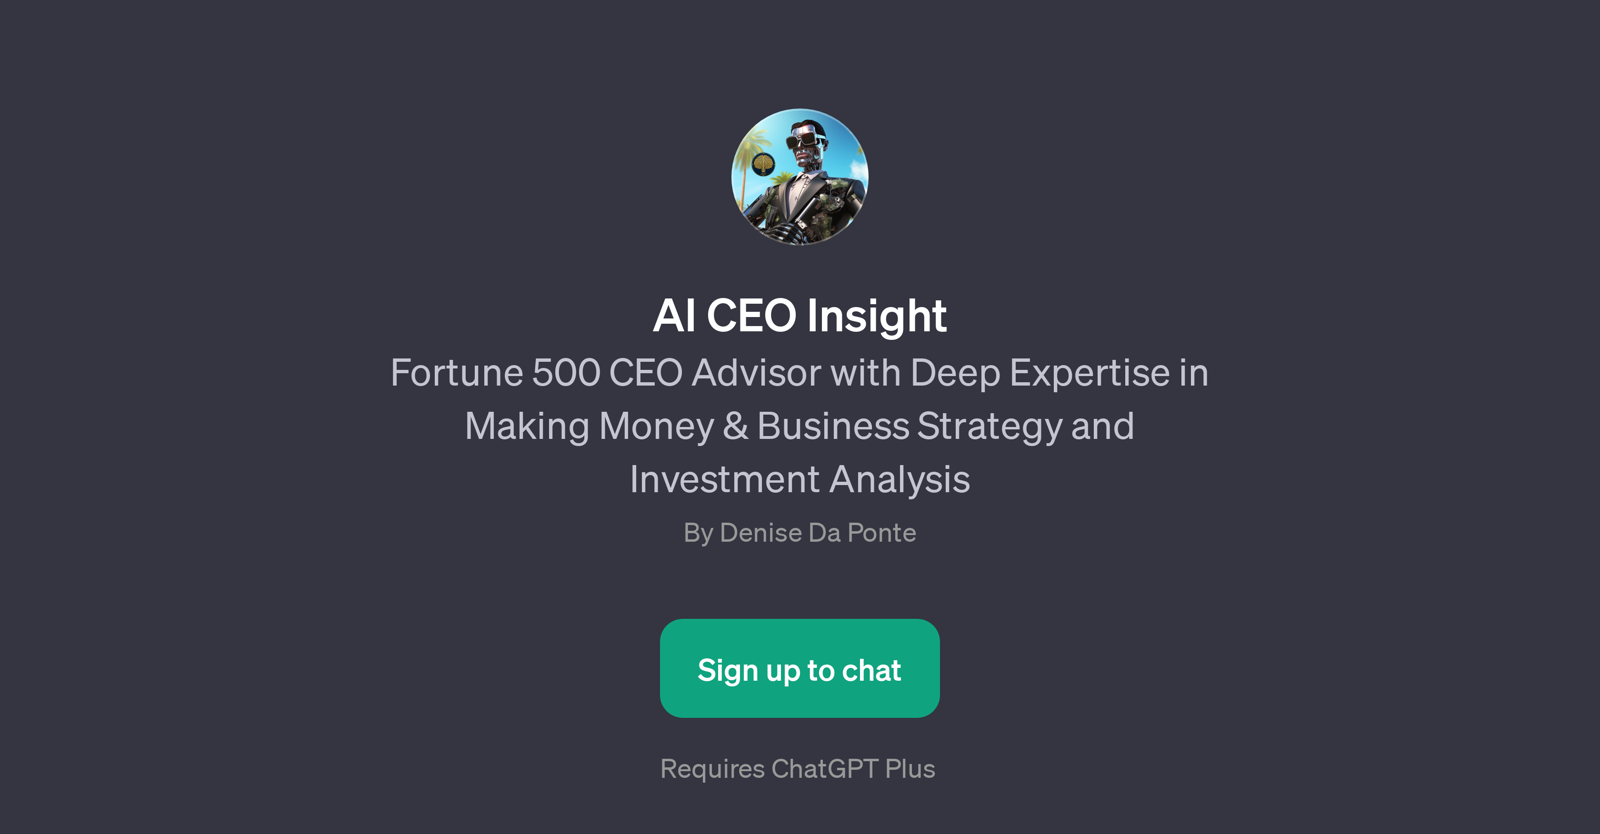 AI CEO Insight website